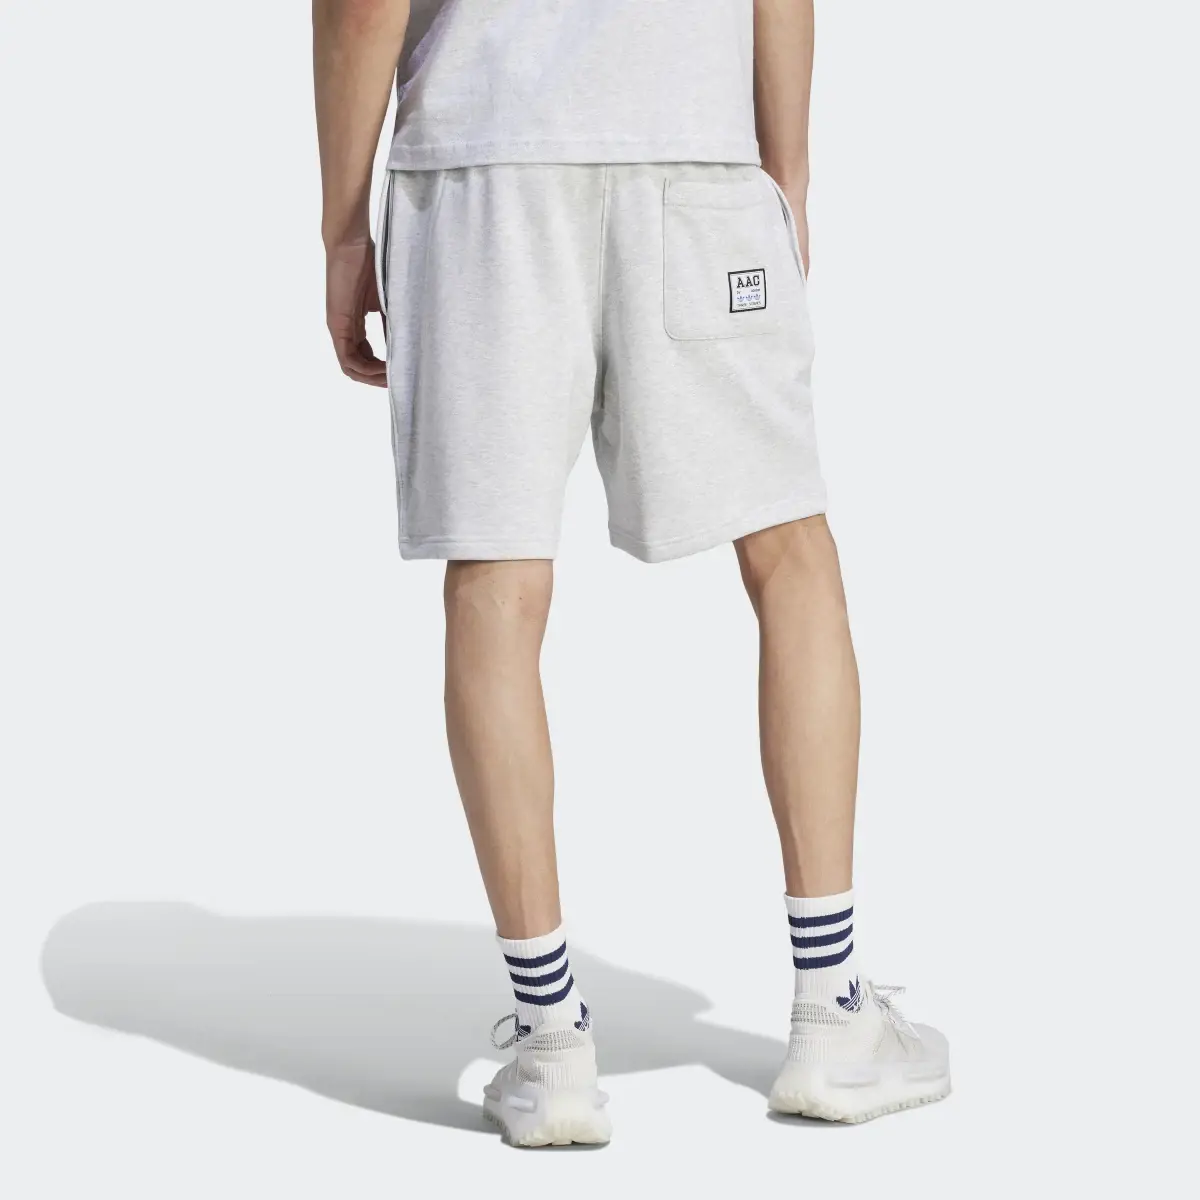 Adidas AAC Shorts. 3